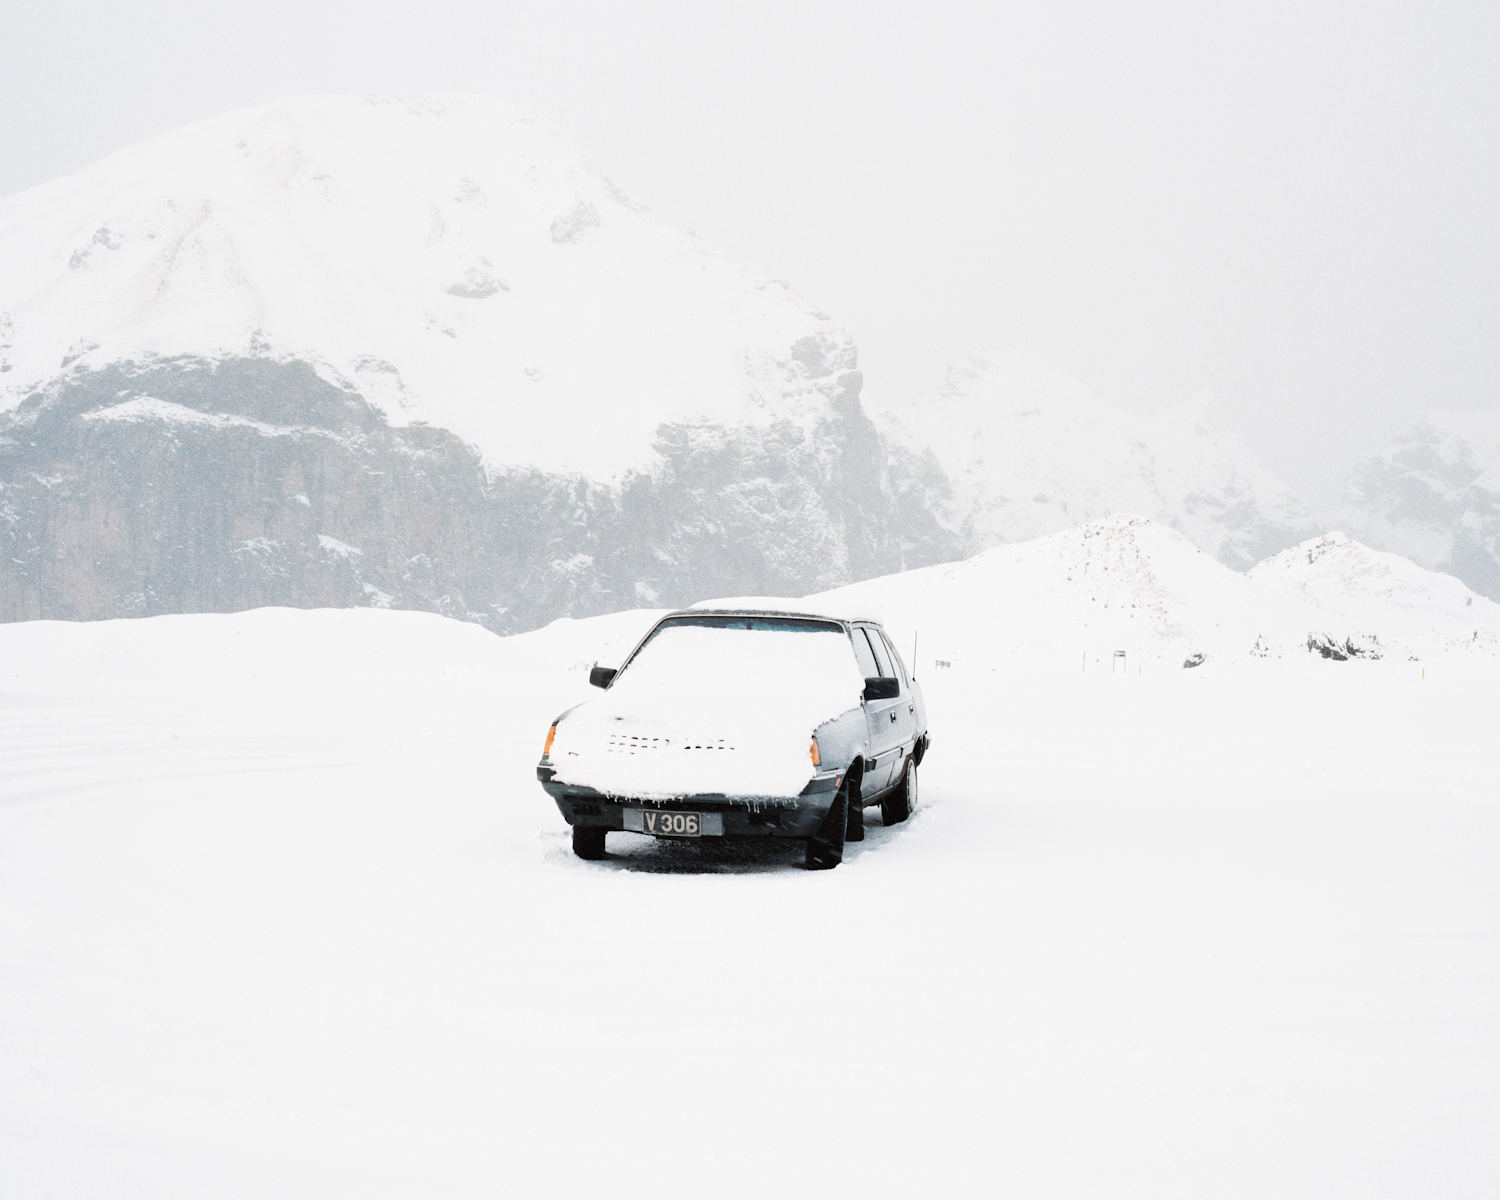  Car in Snow, Vestmannaeyjar, 2015.  Project Statement  